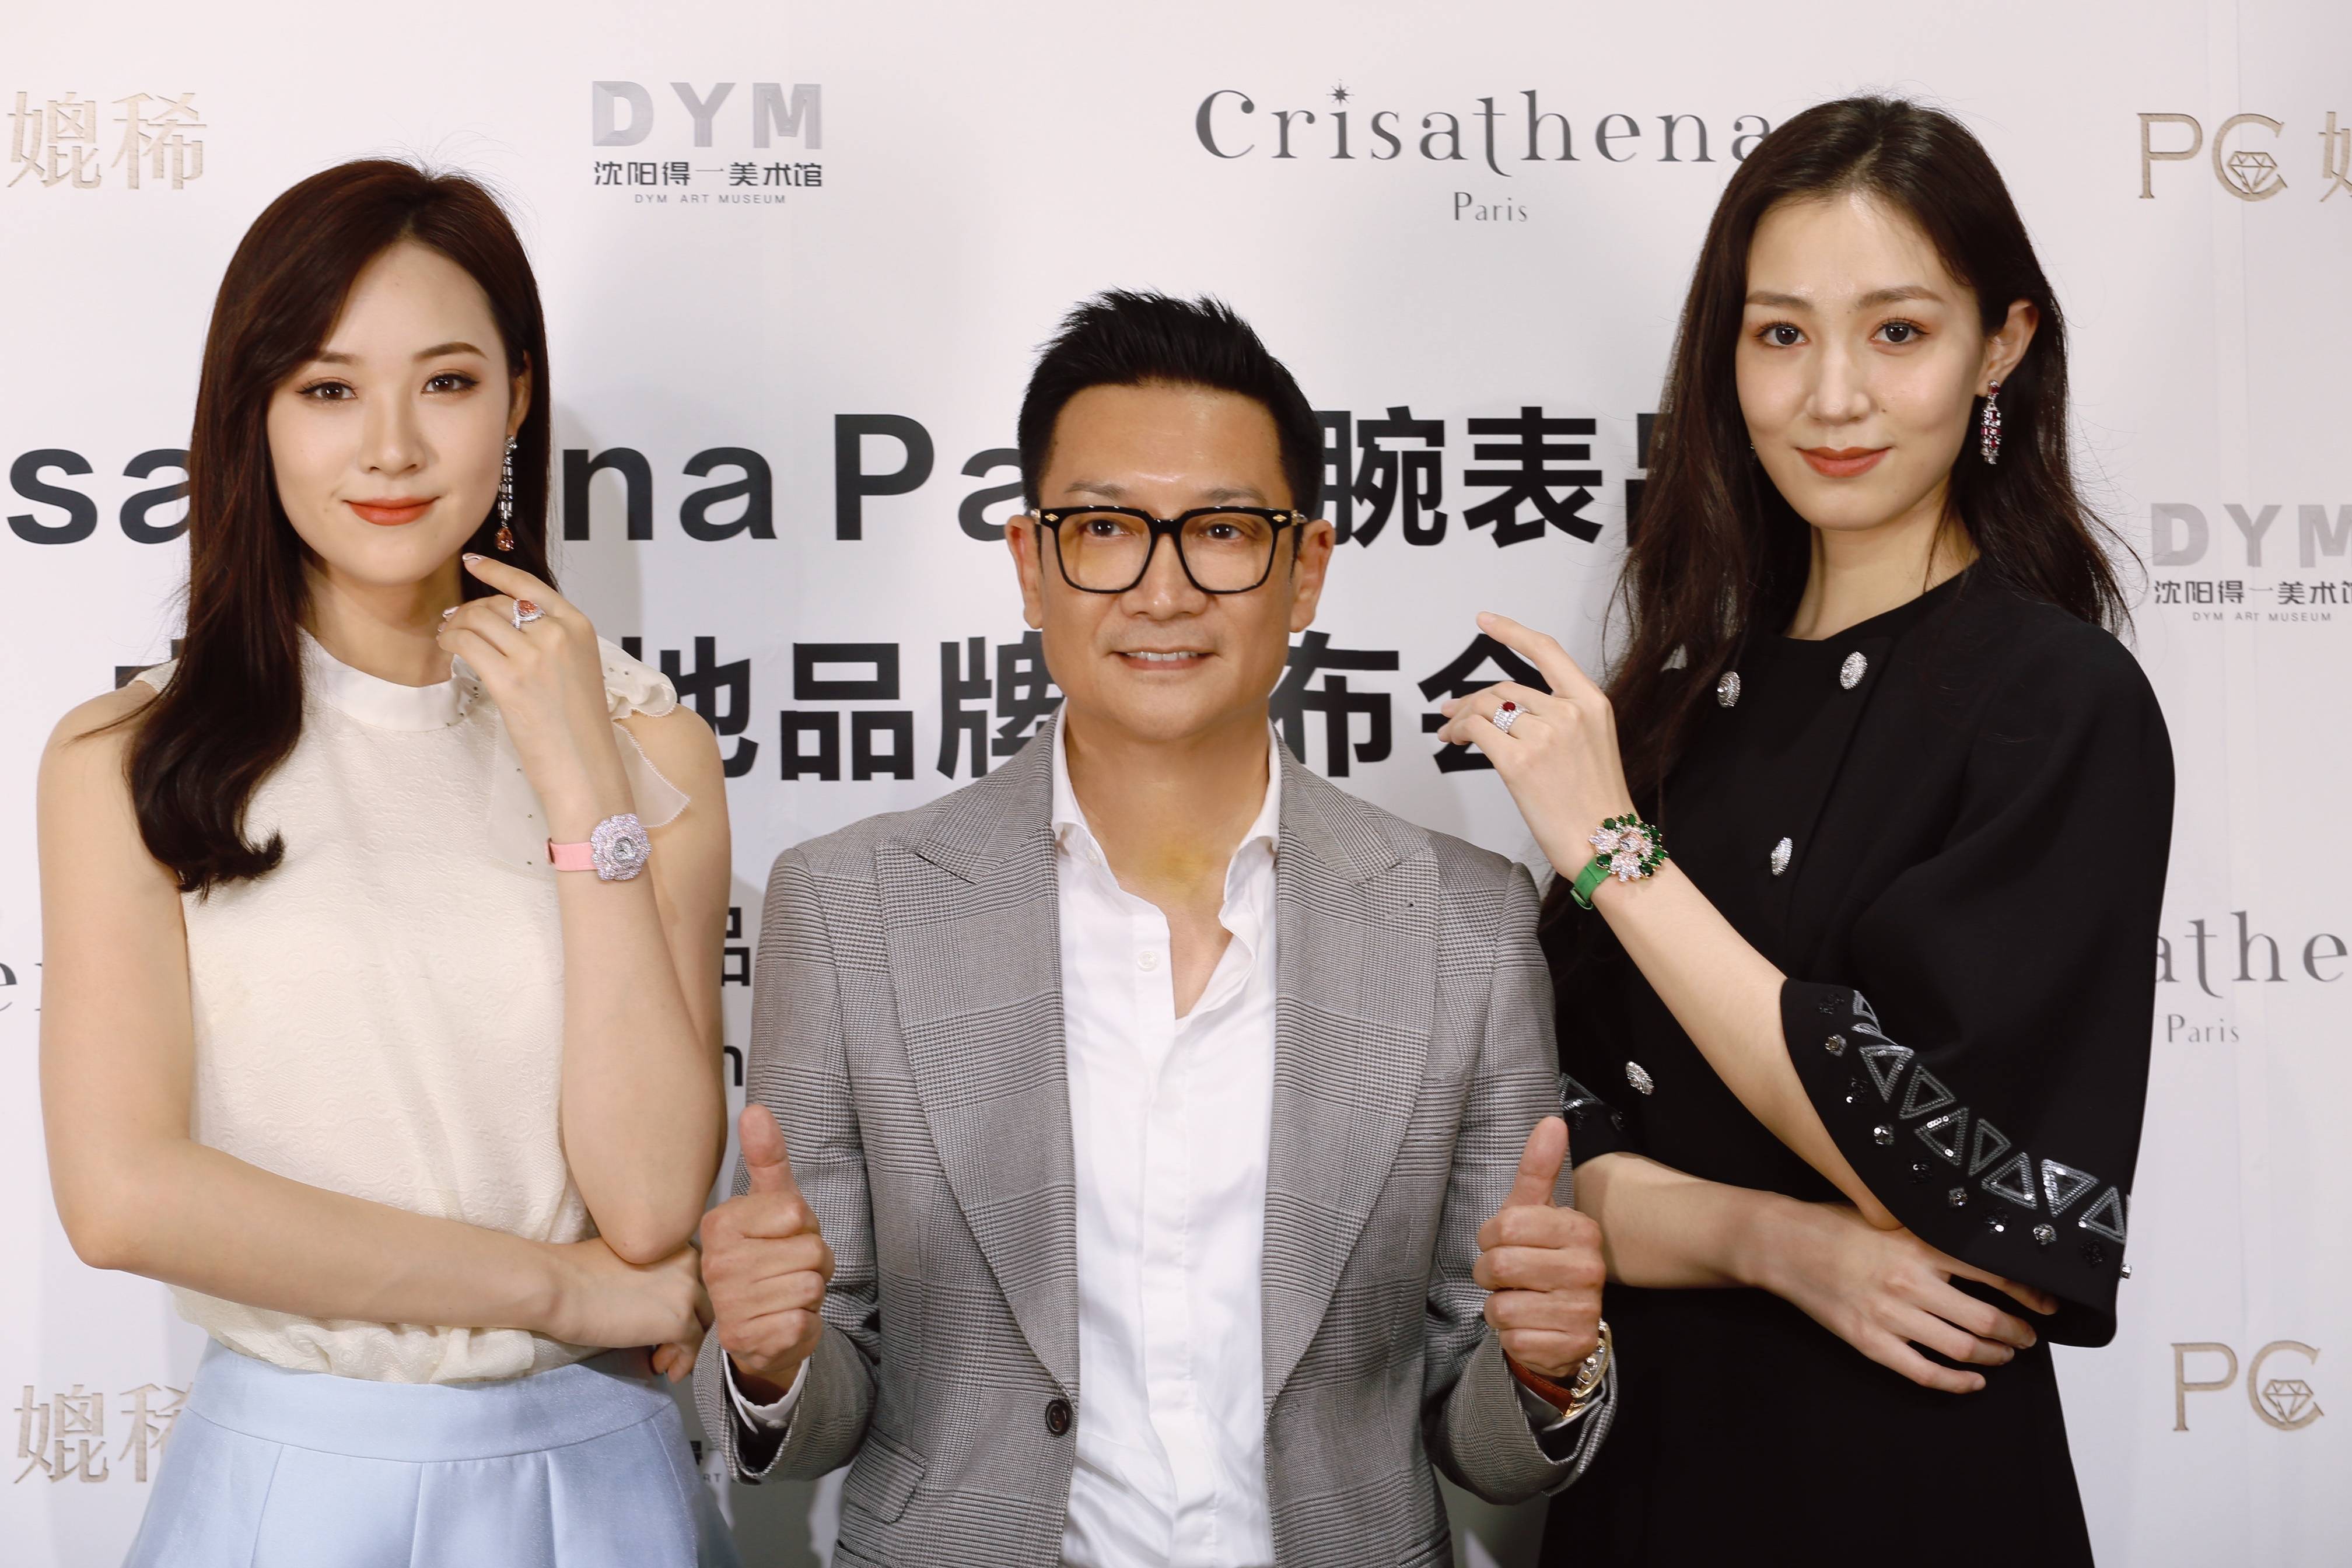 crisathenaparis腕表中国内地品牌发布会在沈阳万豪酒店得一美术馆耀